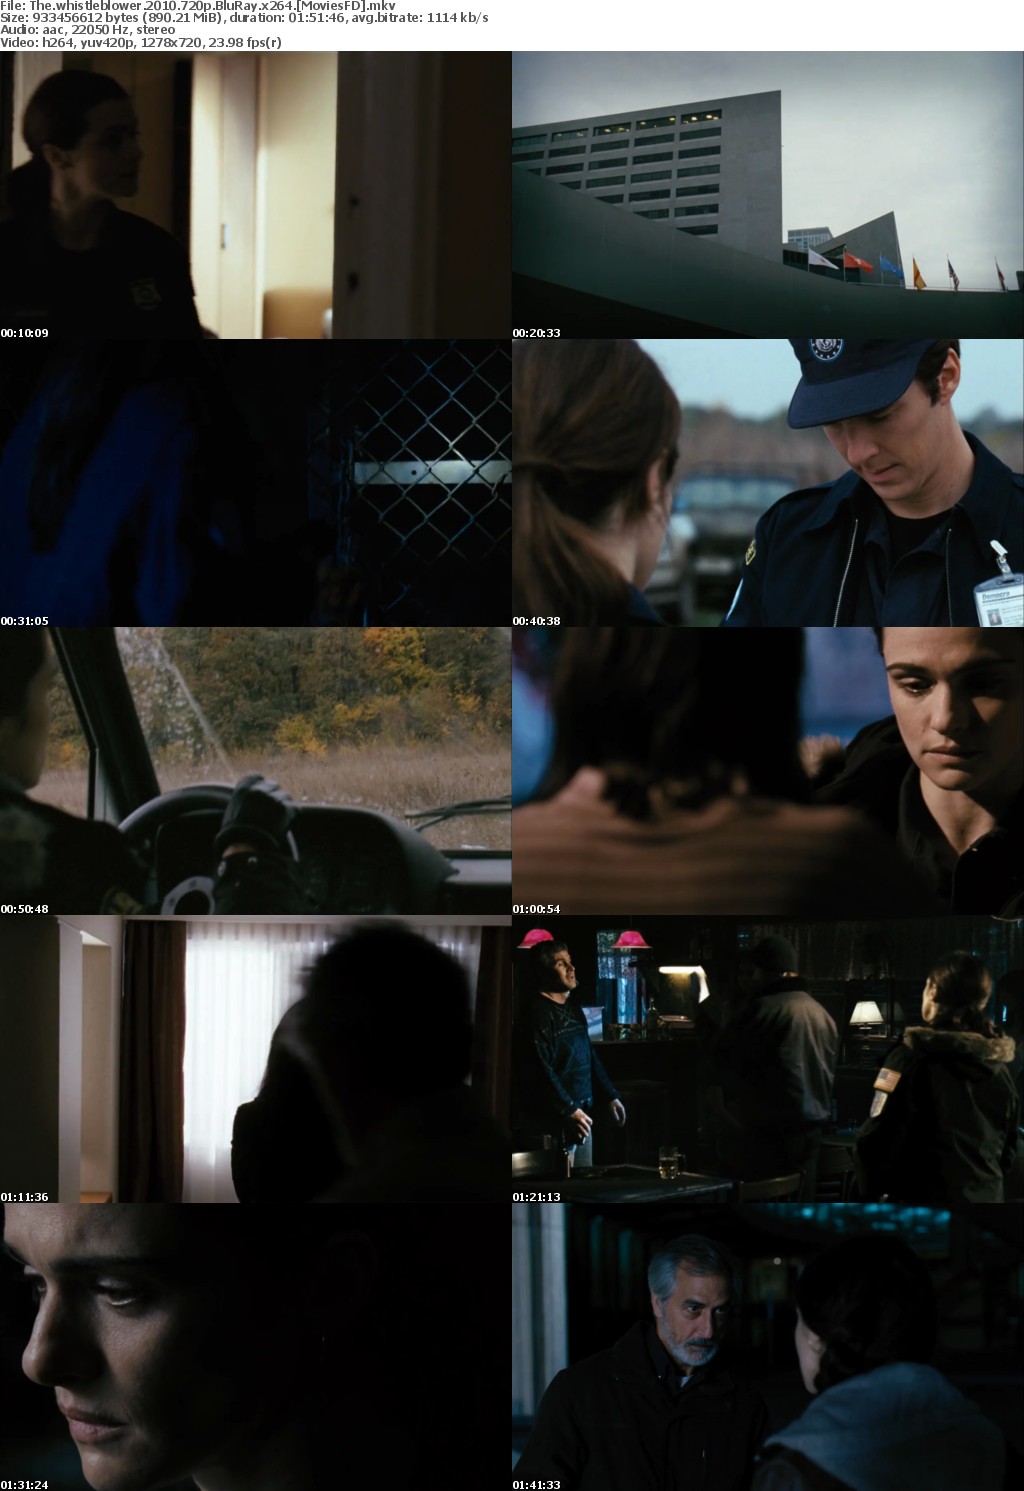 The Whistleblower (2010) 720p BluRay x264 - MoviesFD